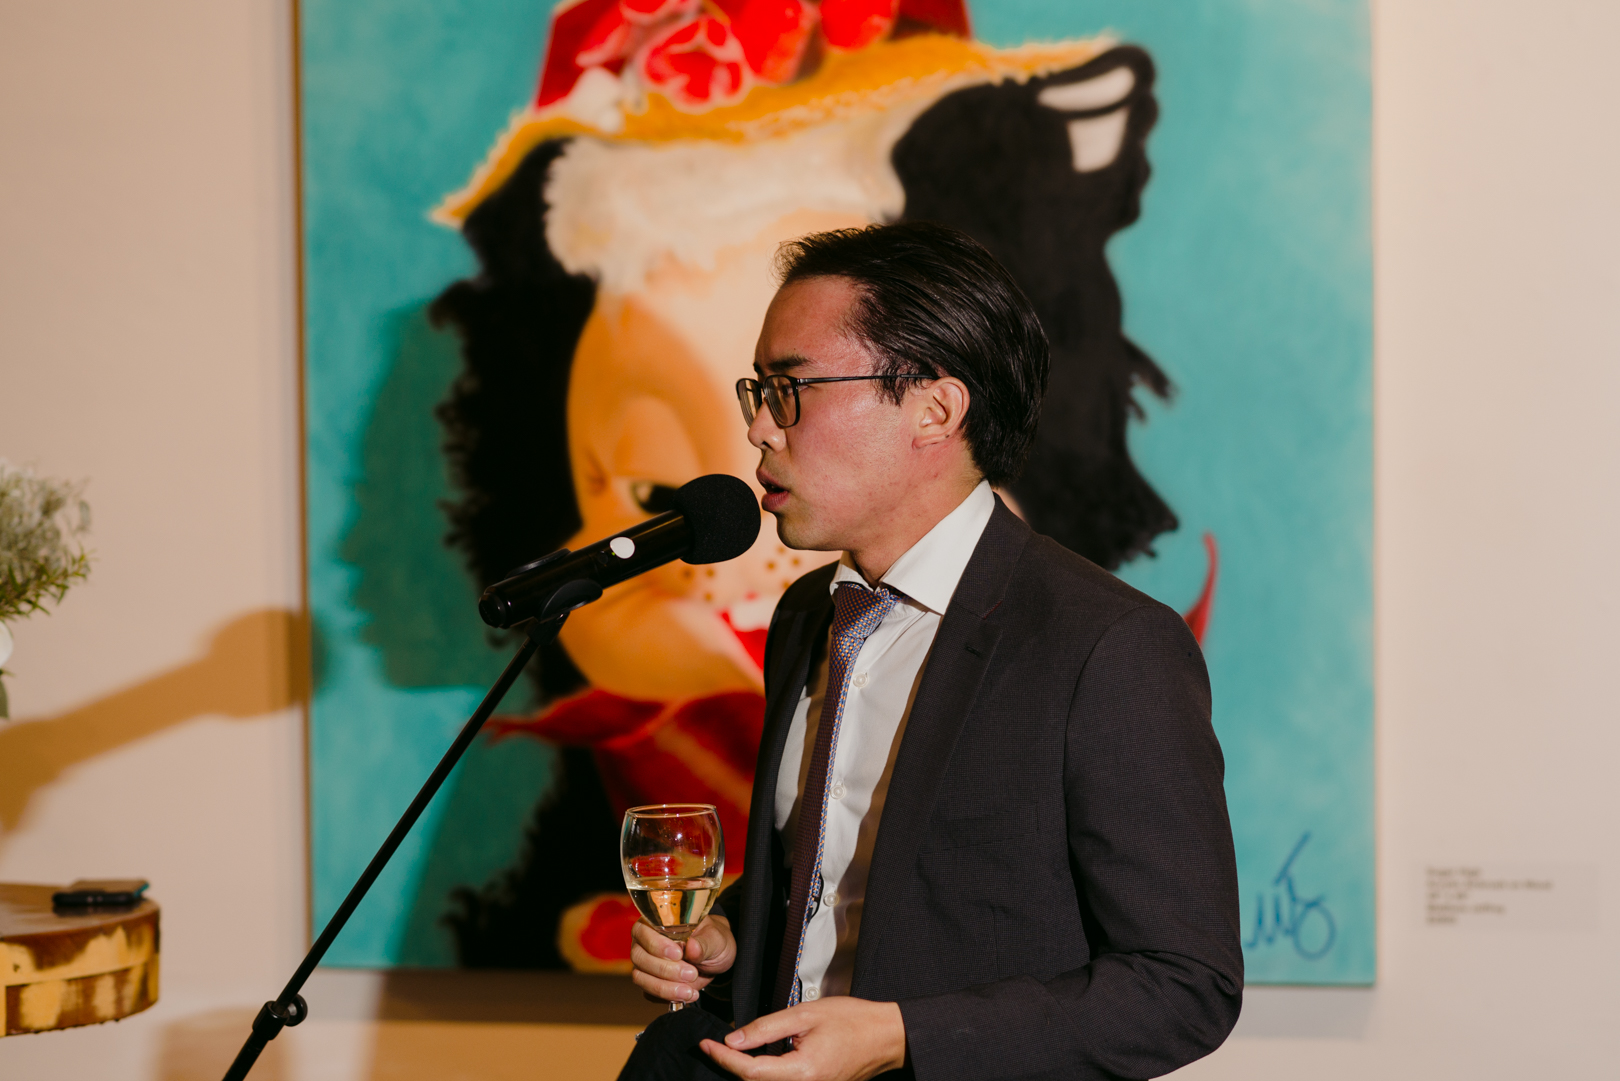 MC giving toast at Orange Art Gallery wedding